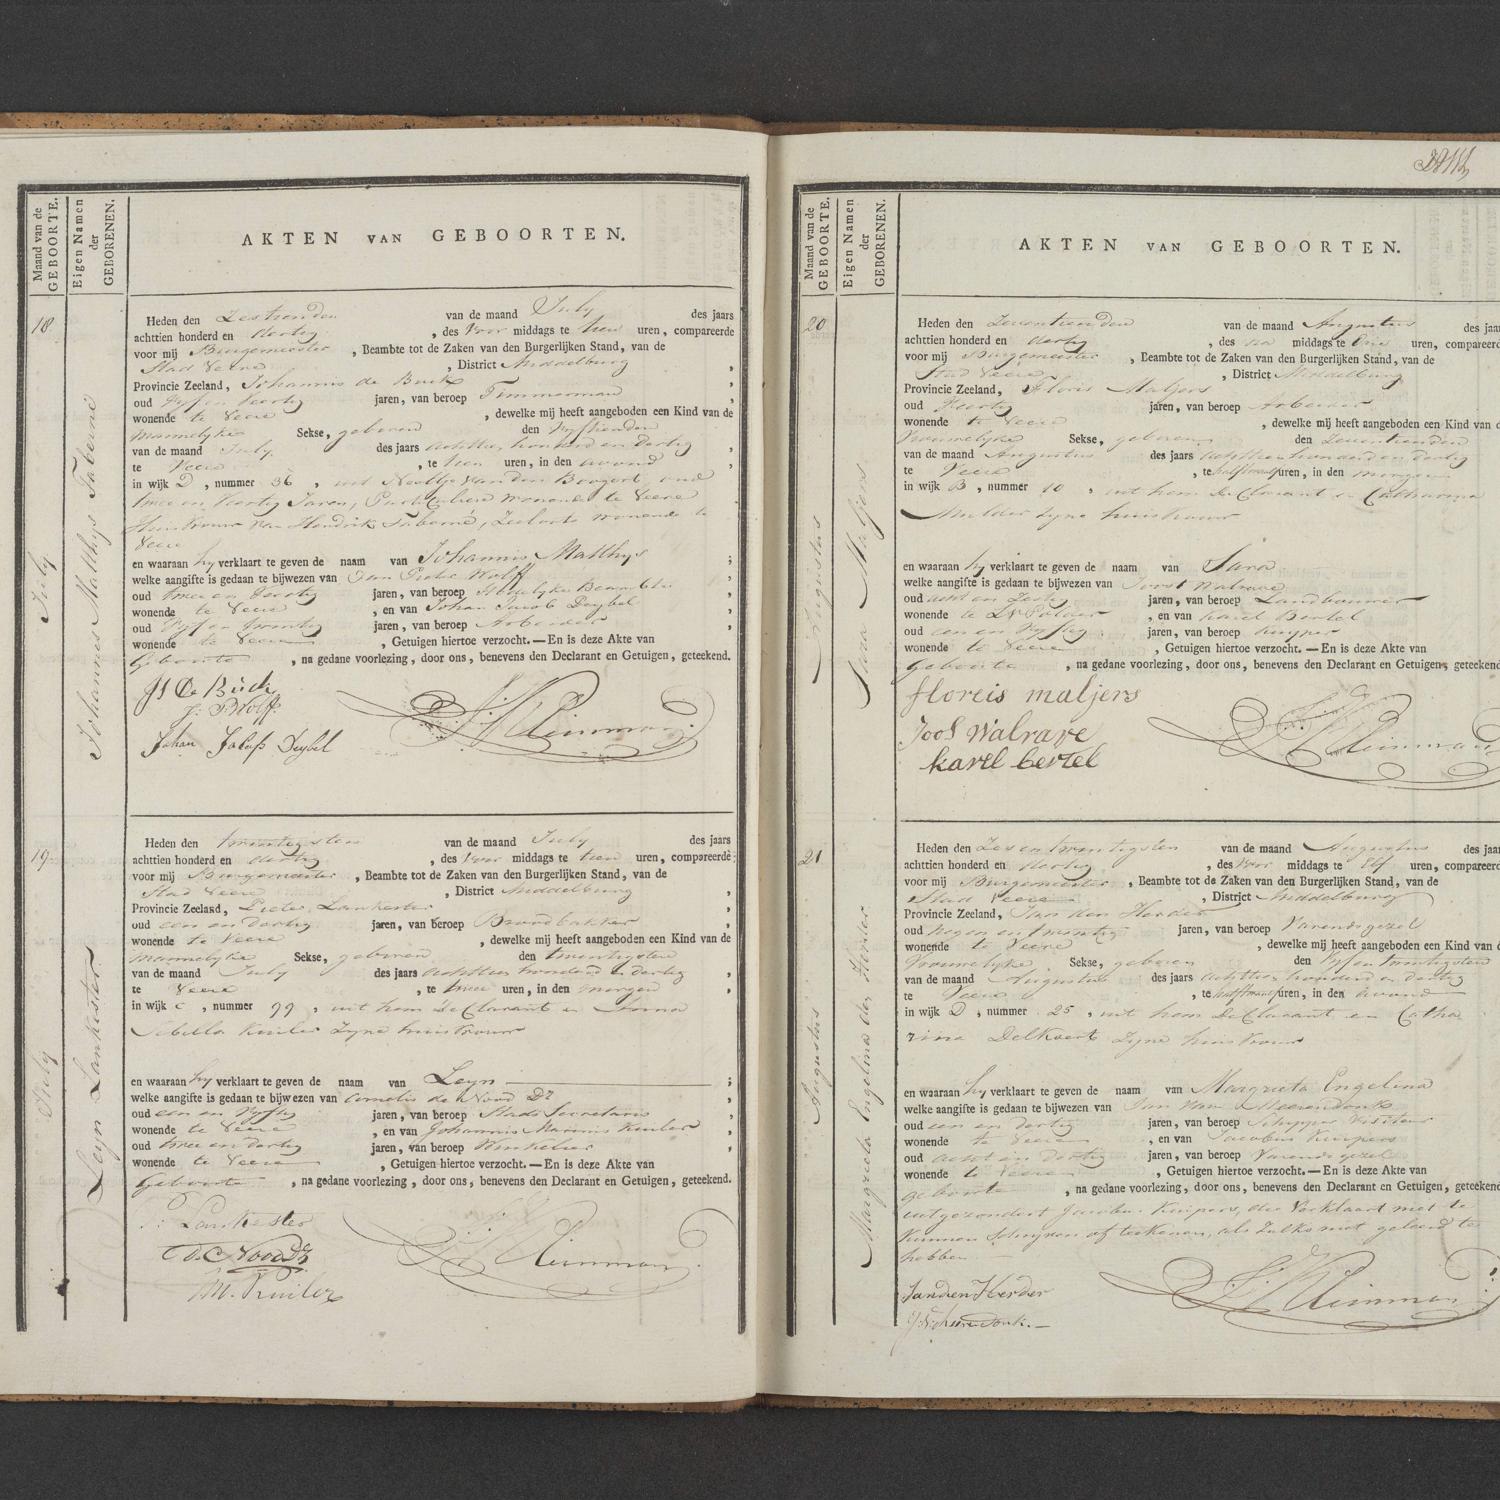 Civil registry of births, Veere, 1830, records 18-21